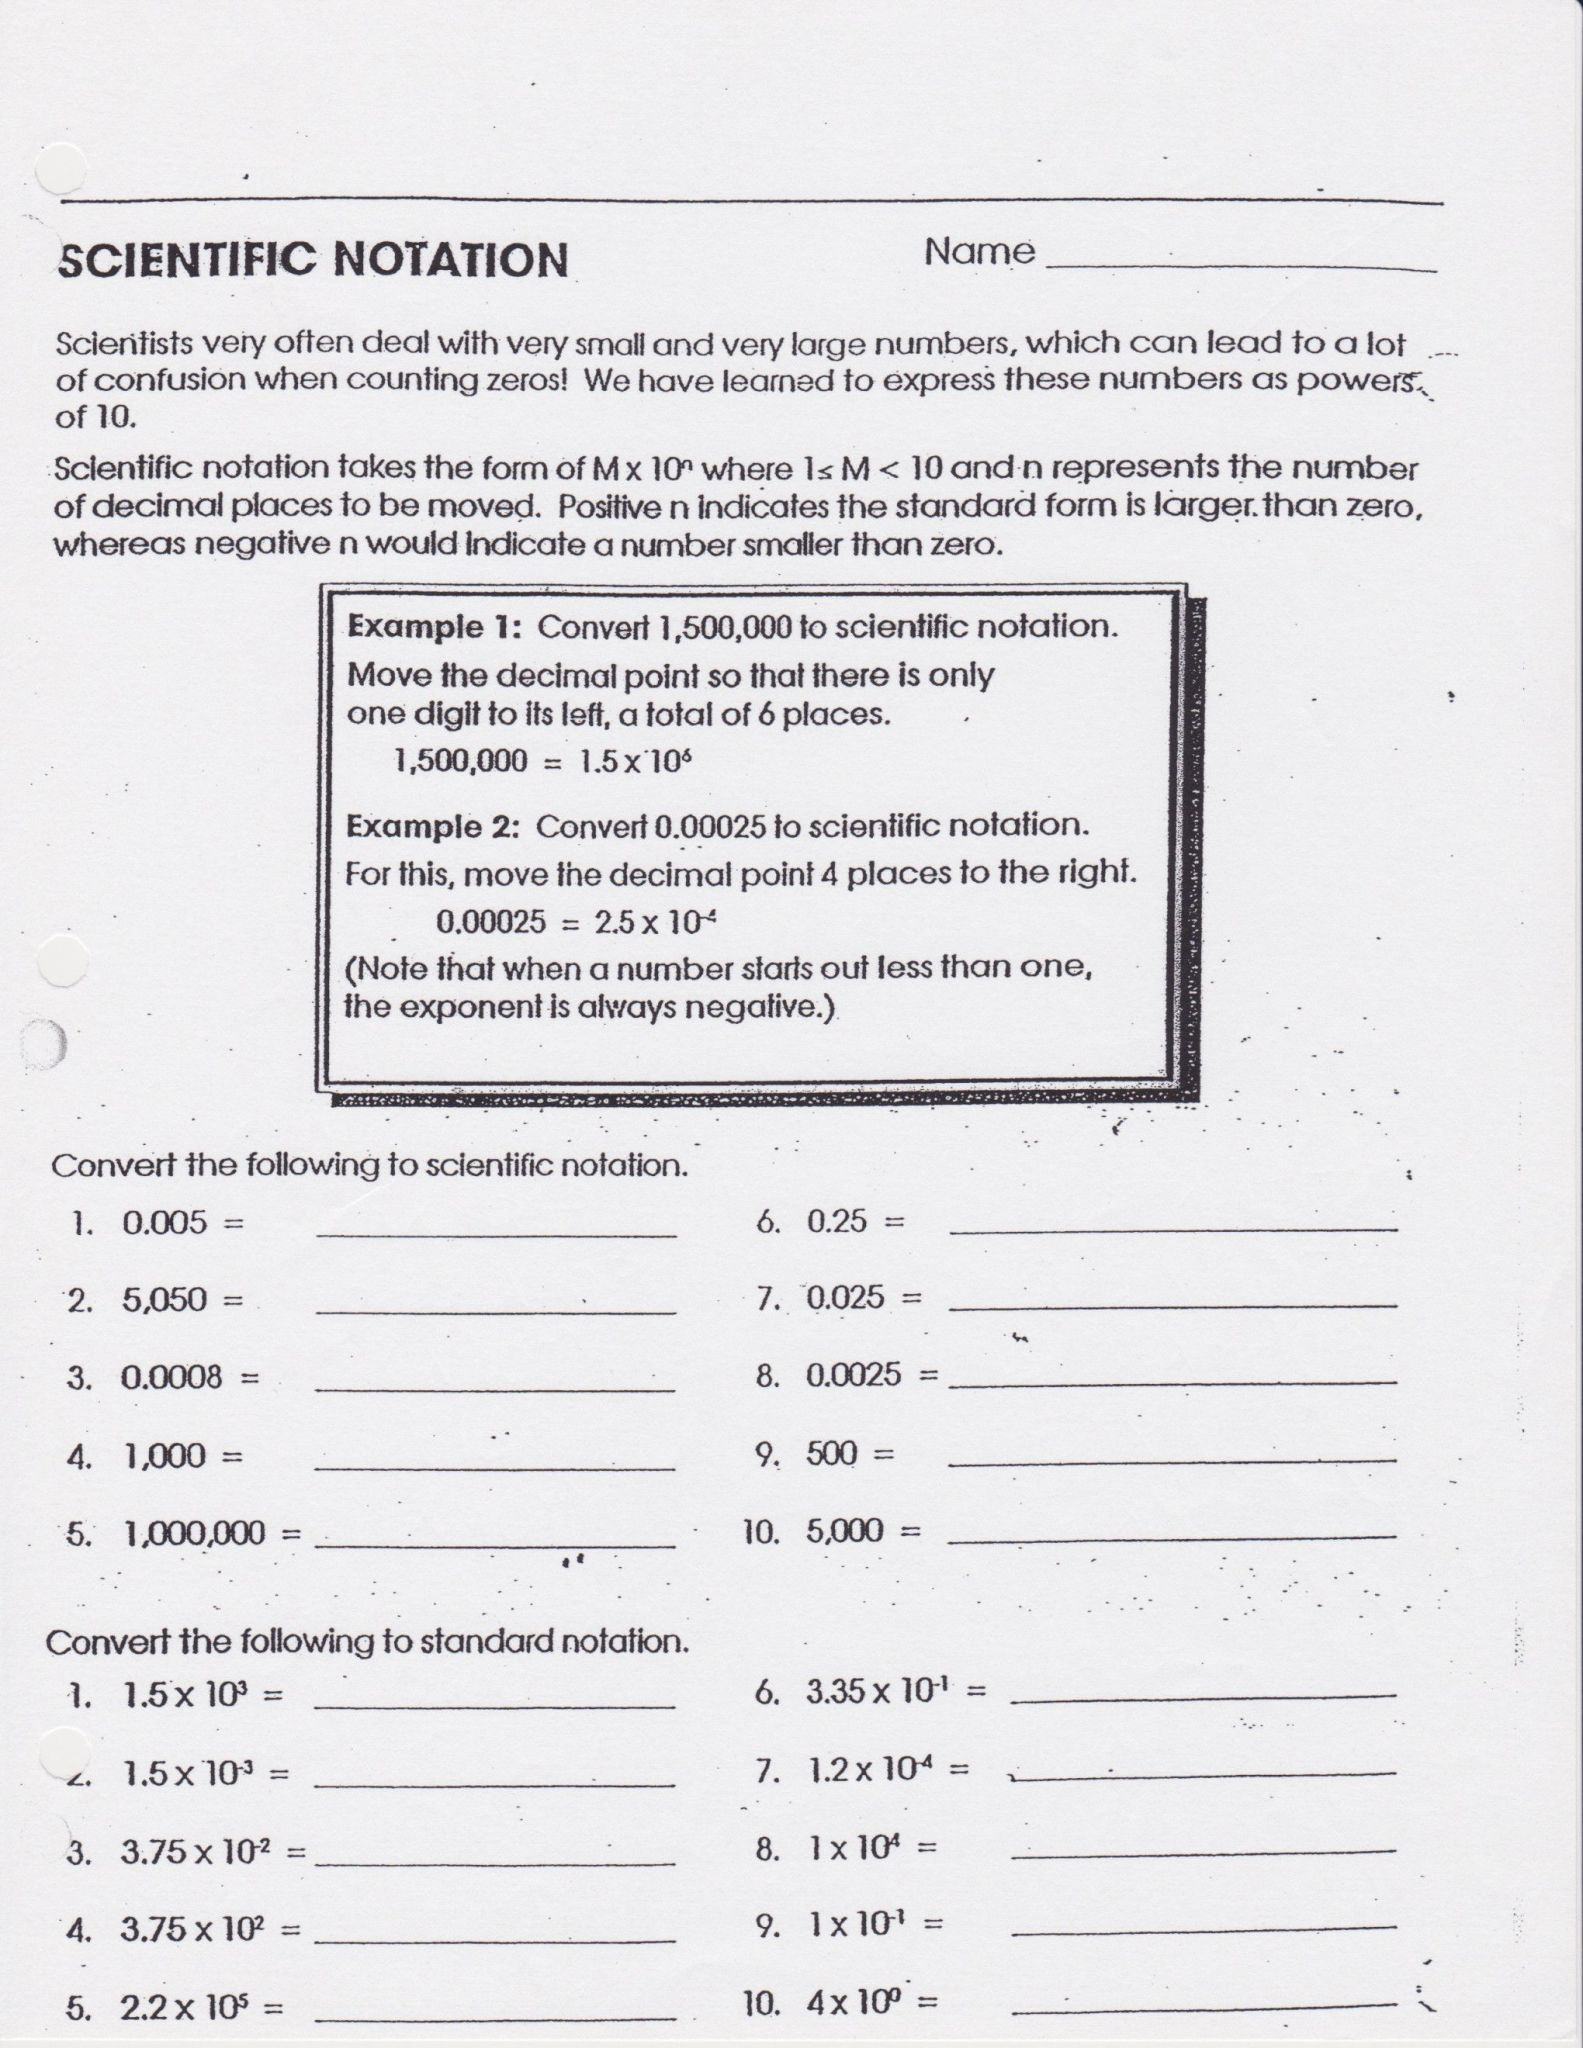 Scientific Notation Worksheet Chemistry db excel com